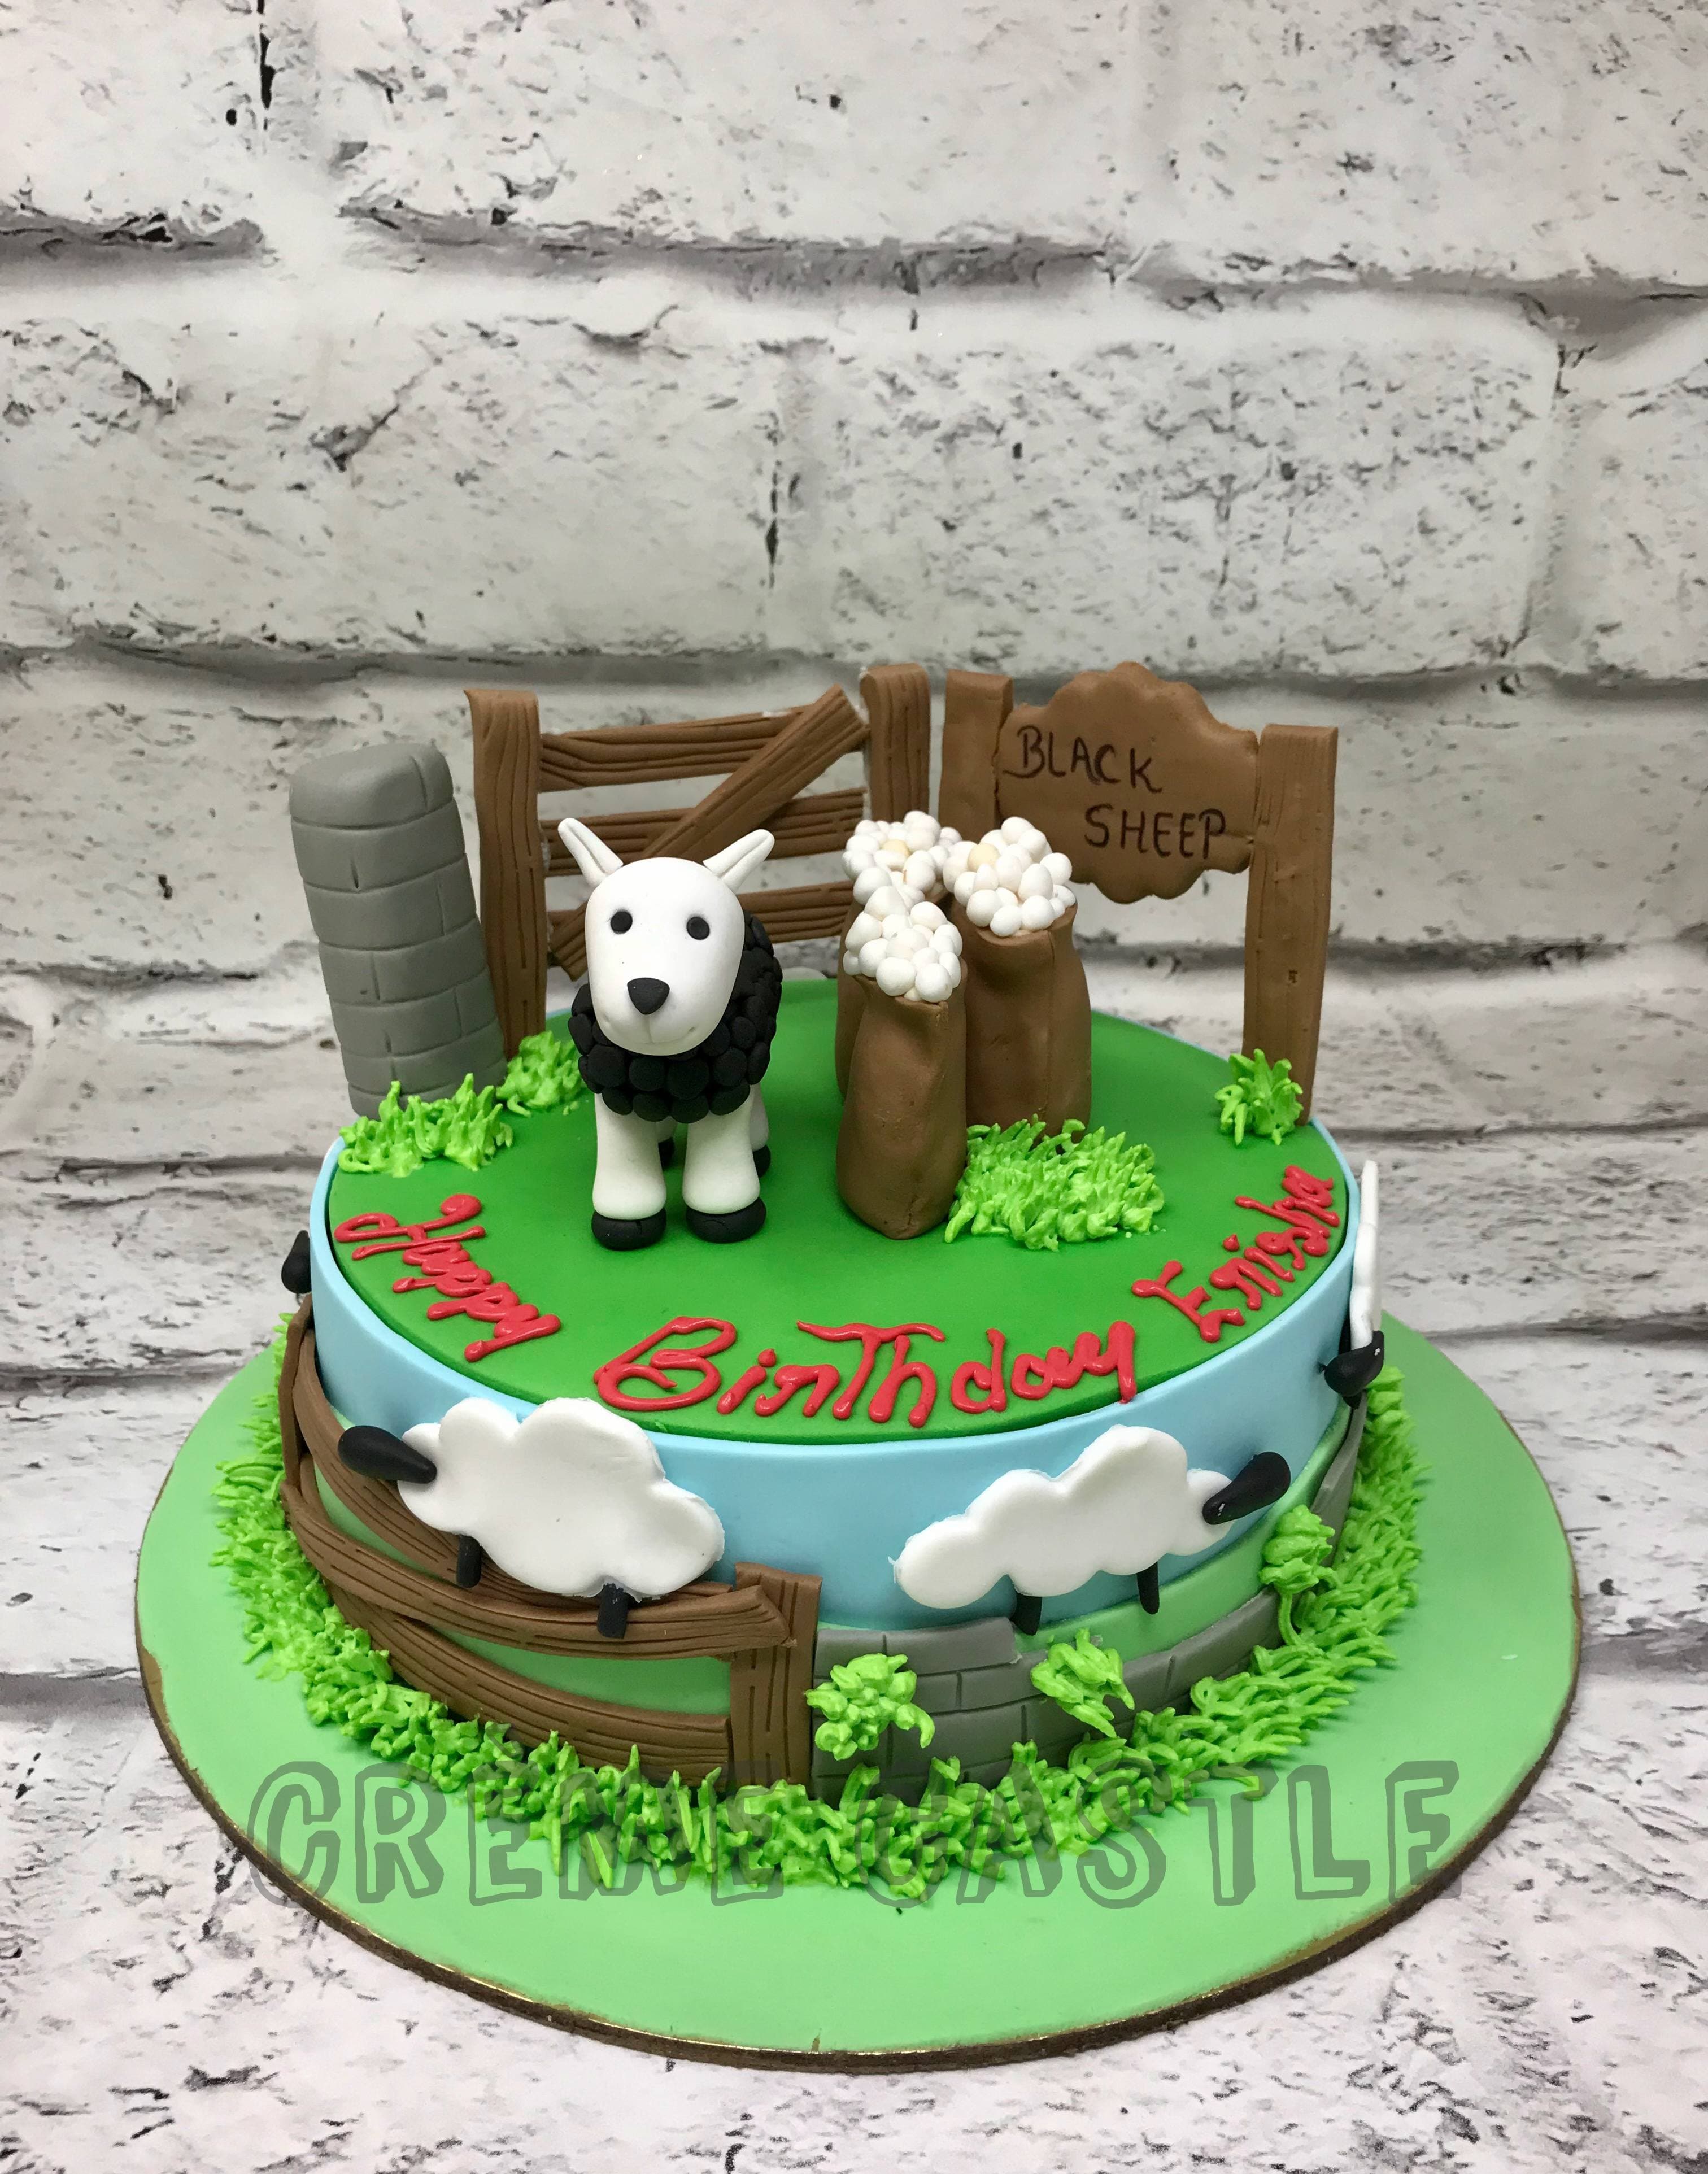 Decorated Cow Cake Recipe - A Classic Twist